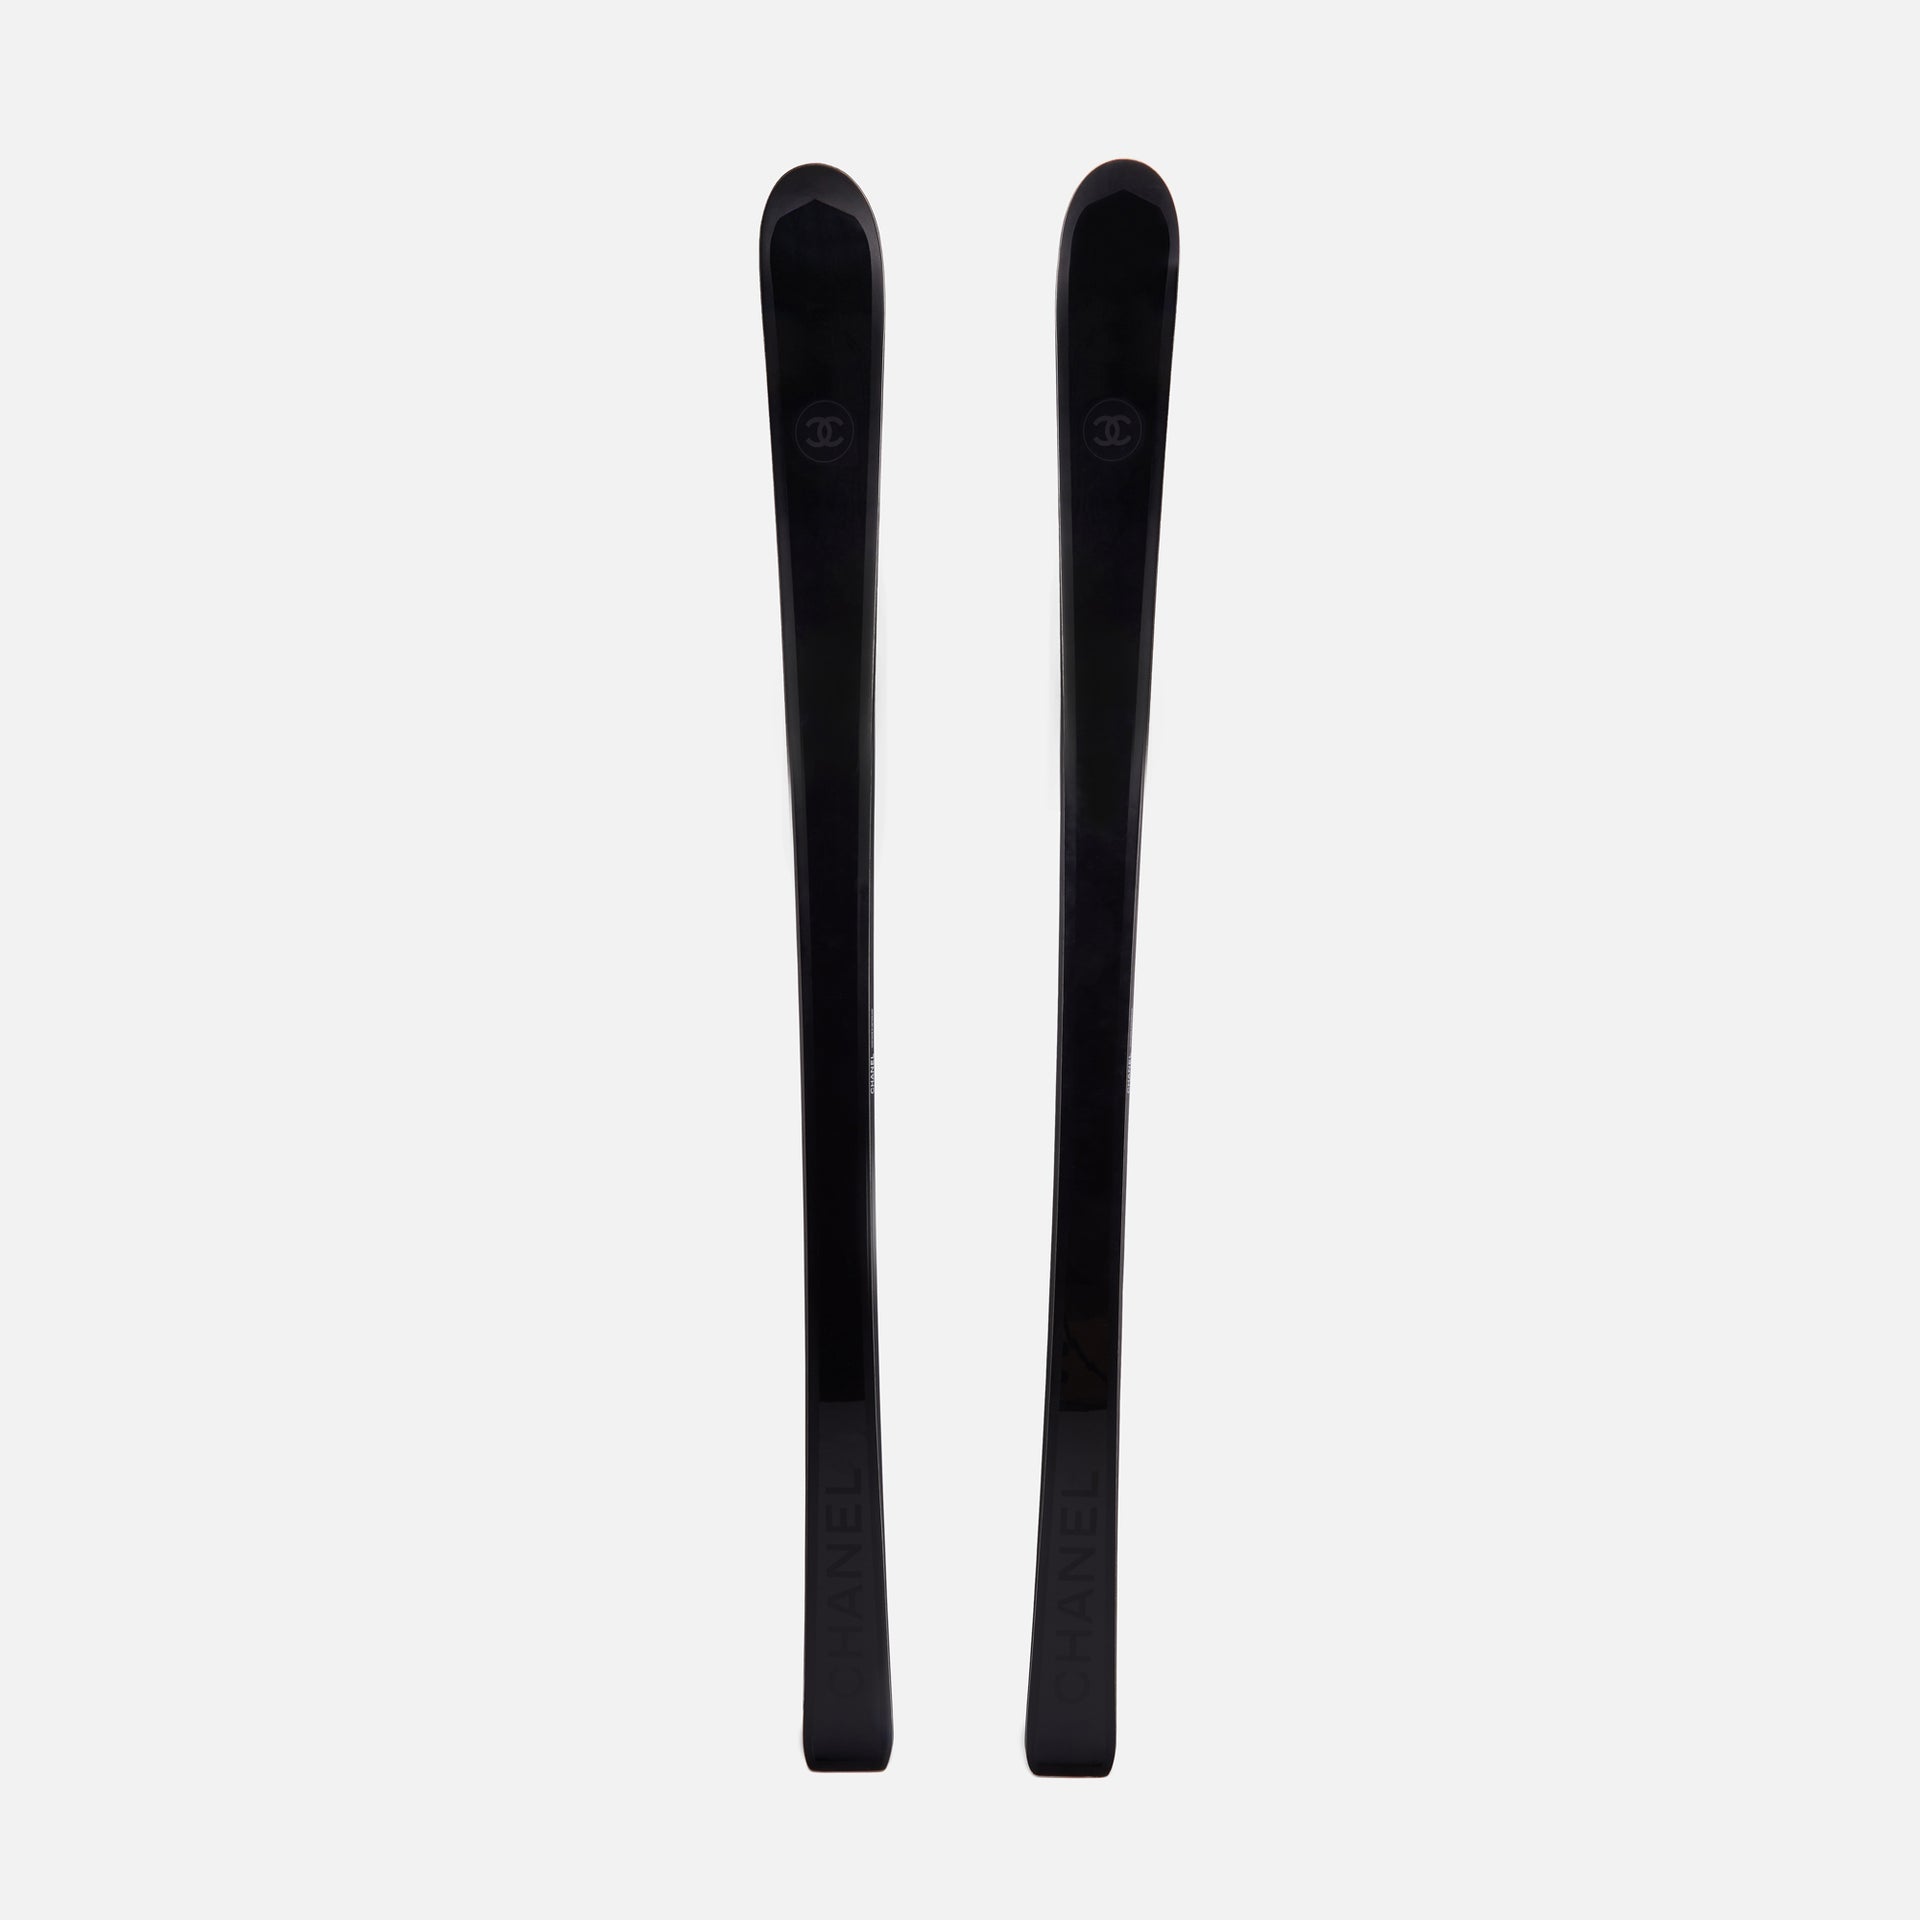 WGACA Chanel Carbon Fiber Skis - Black